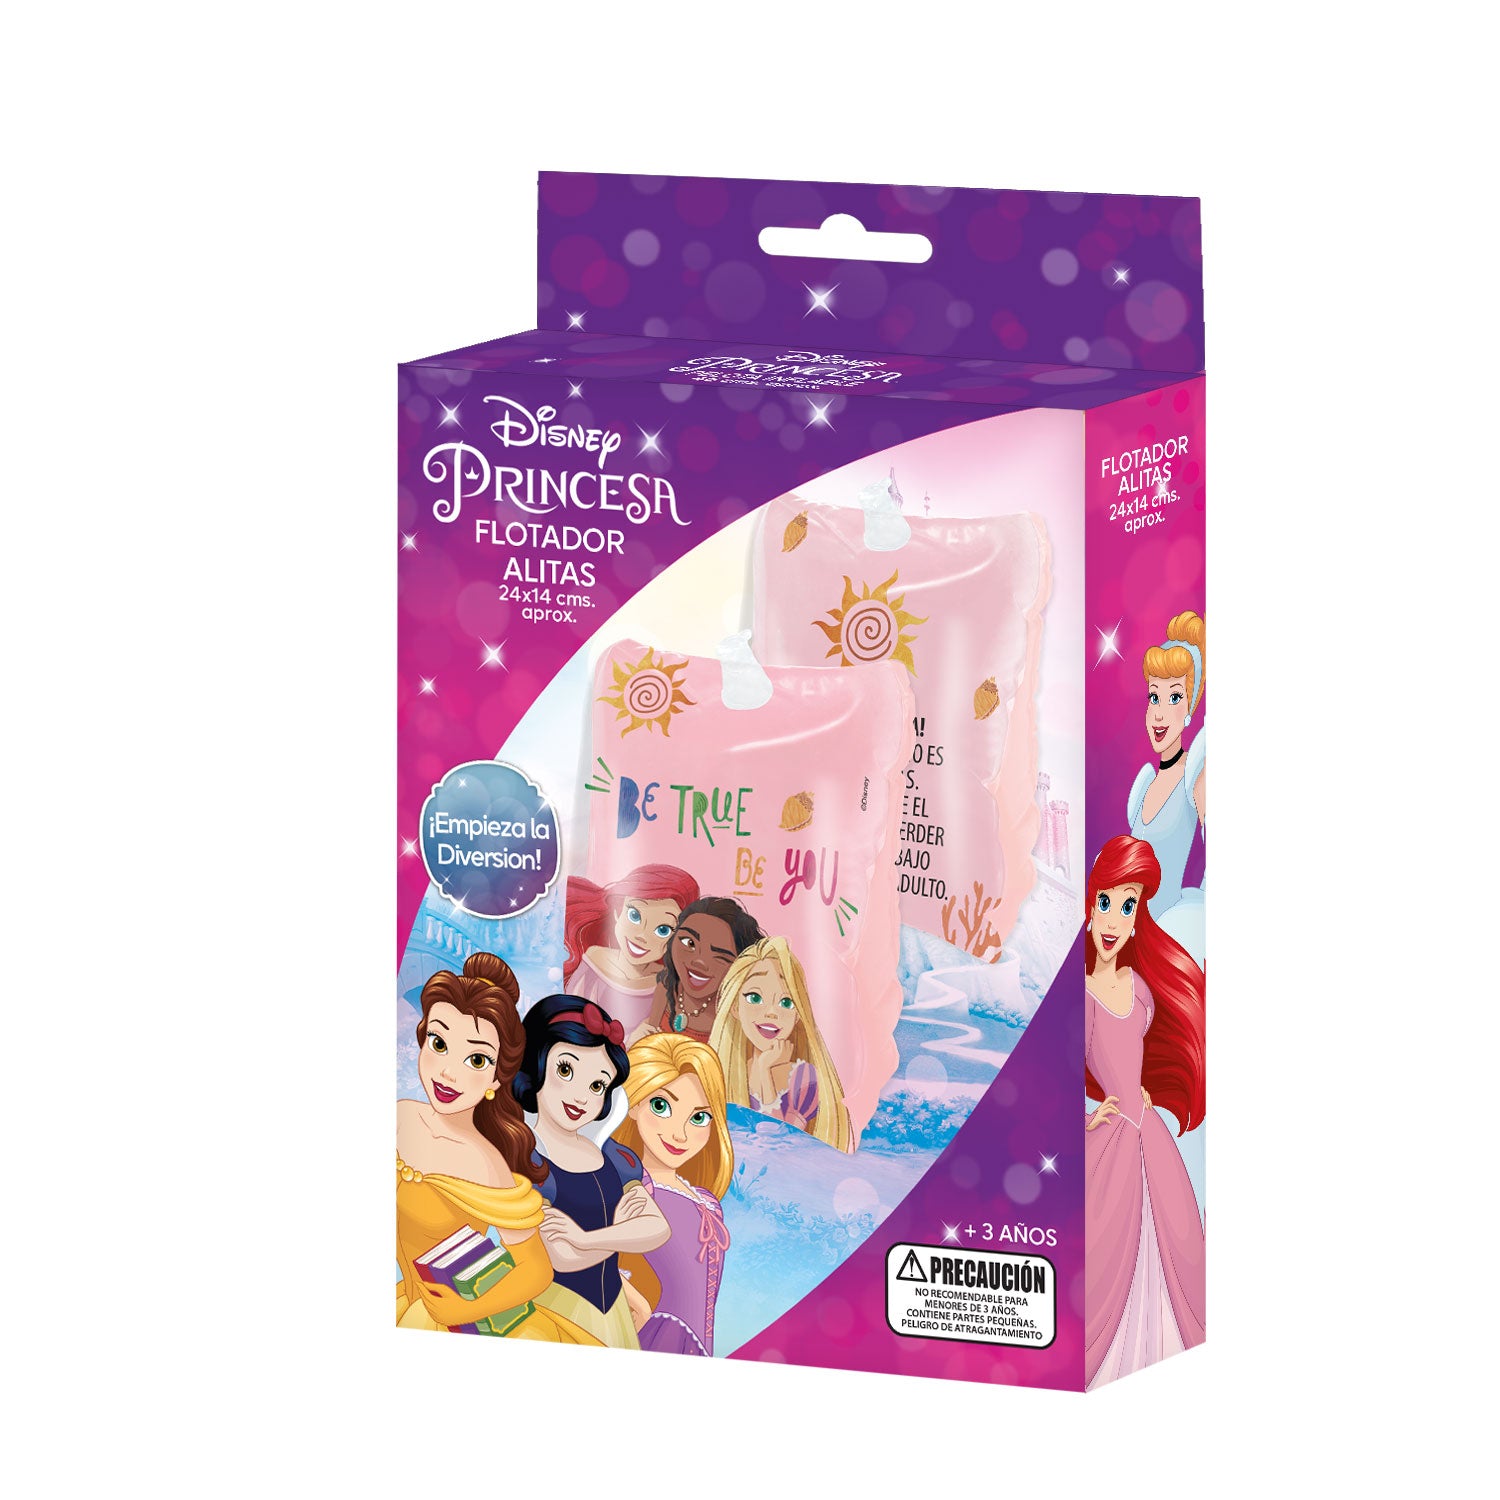 Flotador Alitas 25x15 cm Princesas | Disney